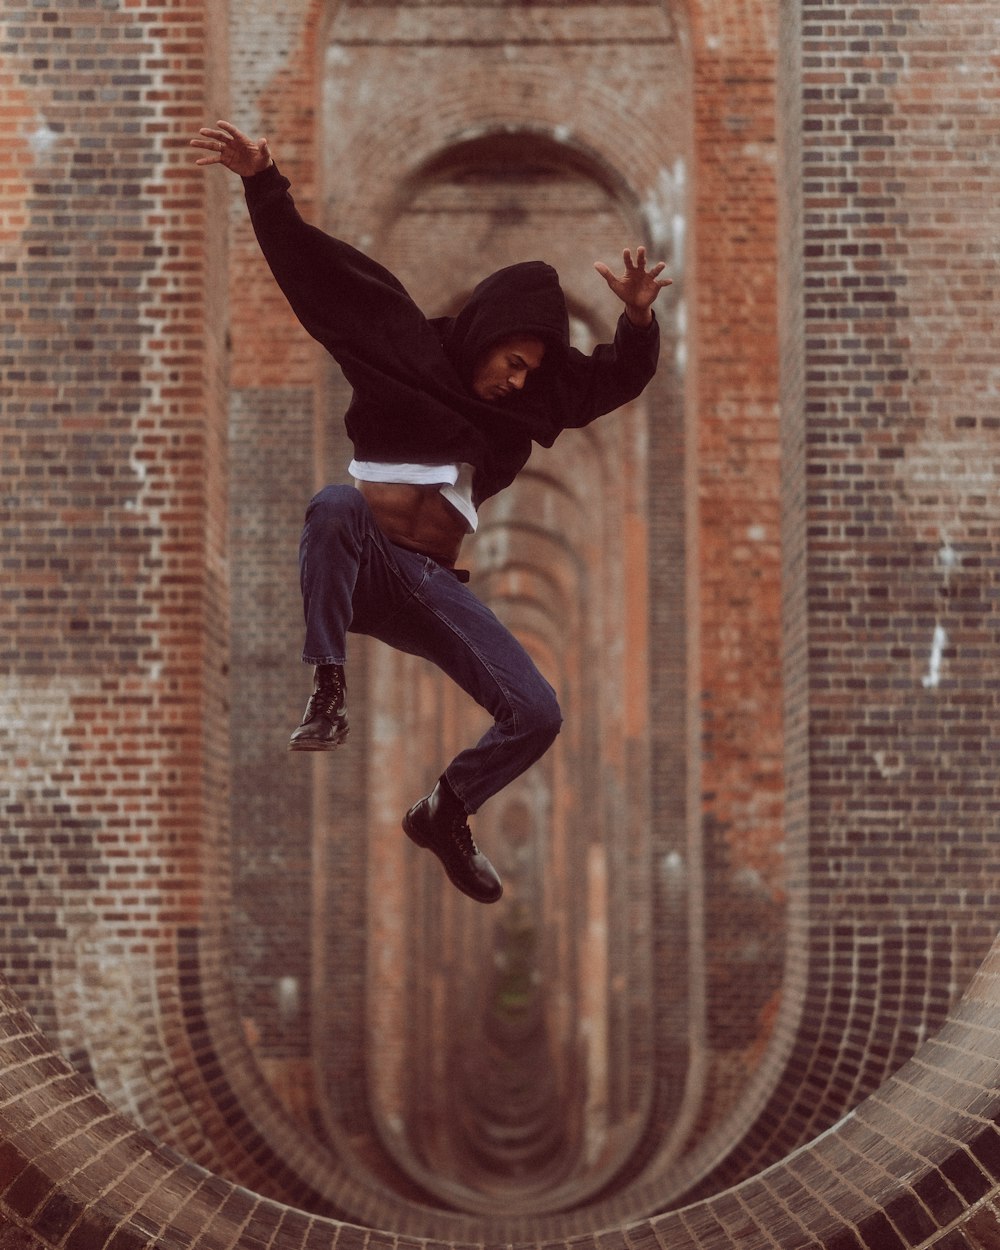 a man doing a trick on a skateboard on a brick building